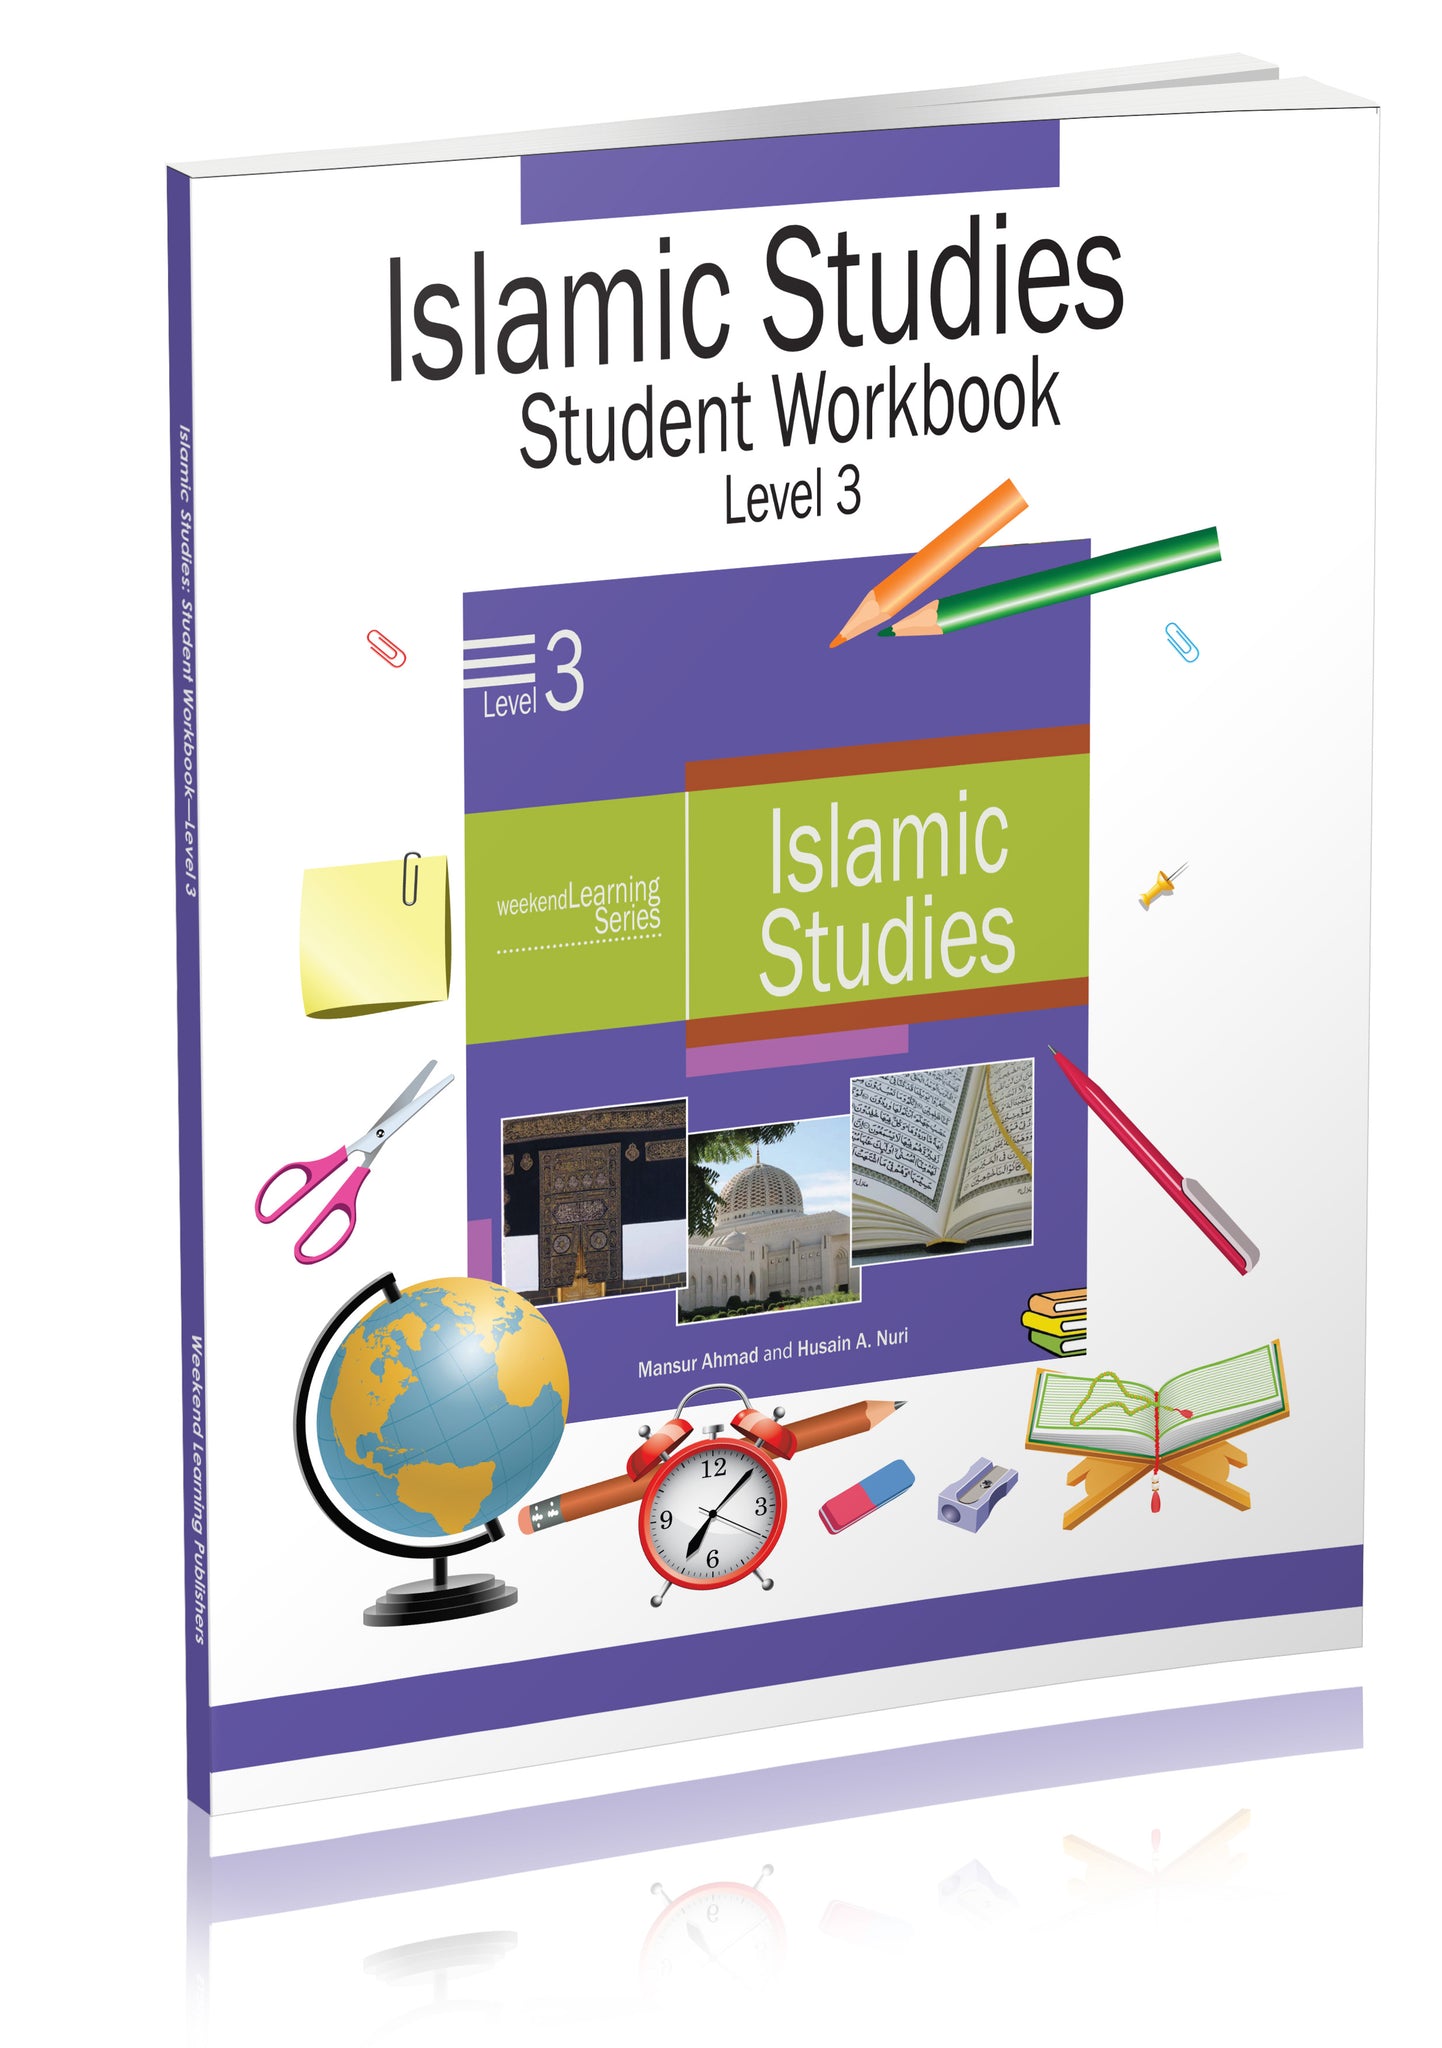 Student Workbook - Islamic Studies Level 3